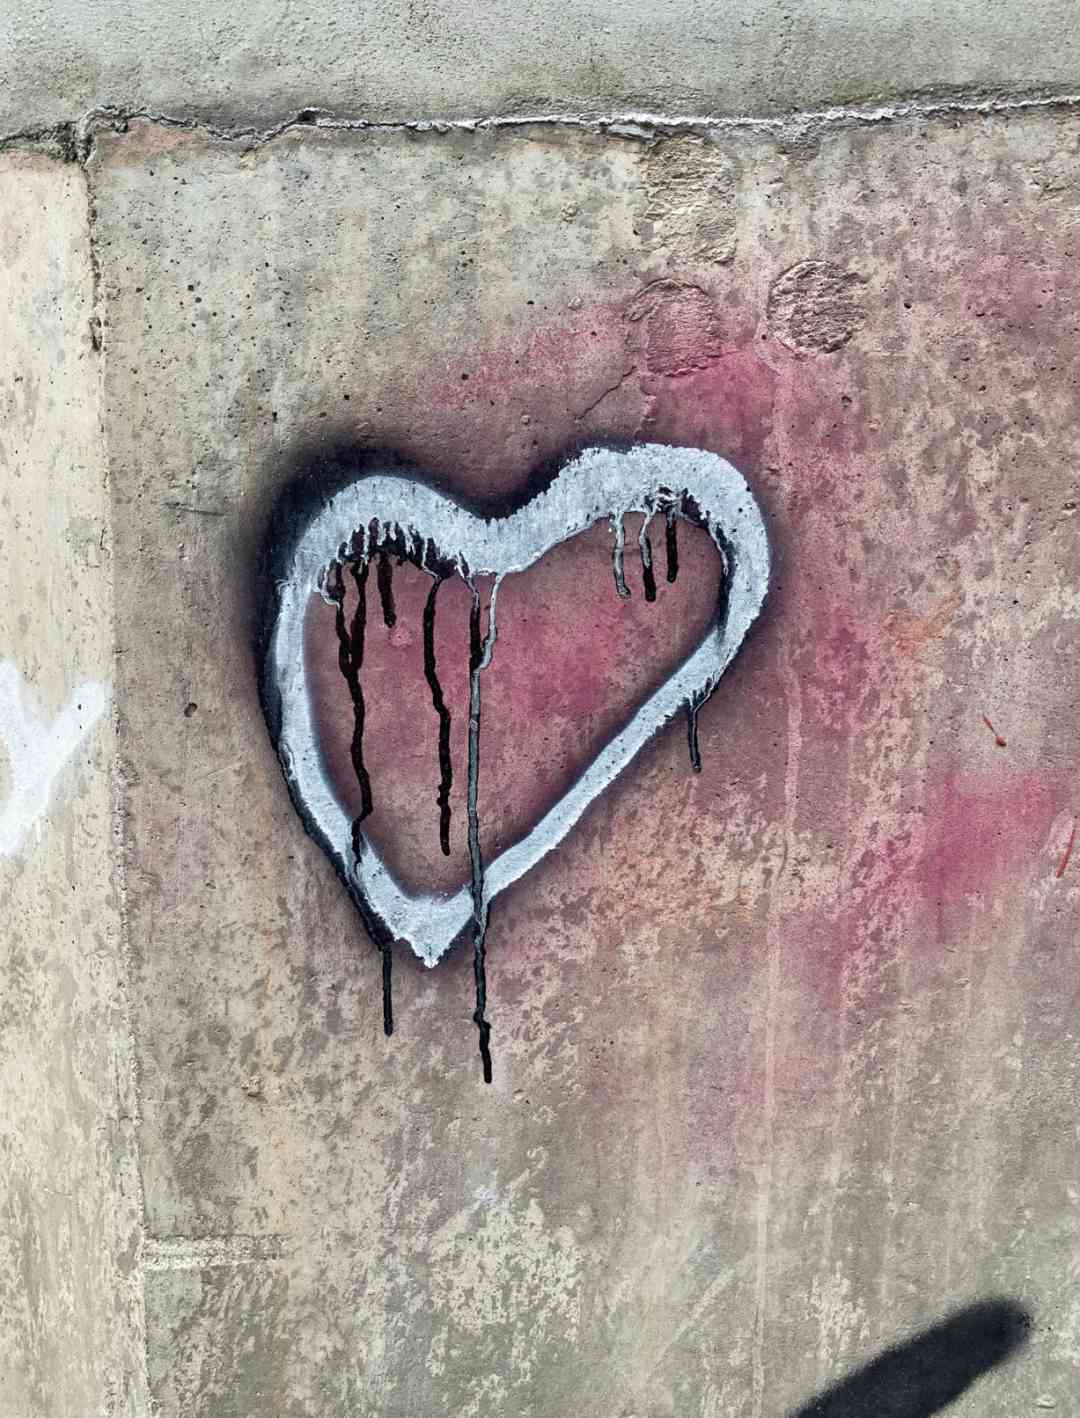 Graffiti Heart, Huyton train station underpass, a civic heart ?